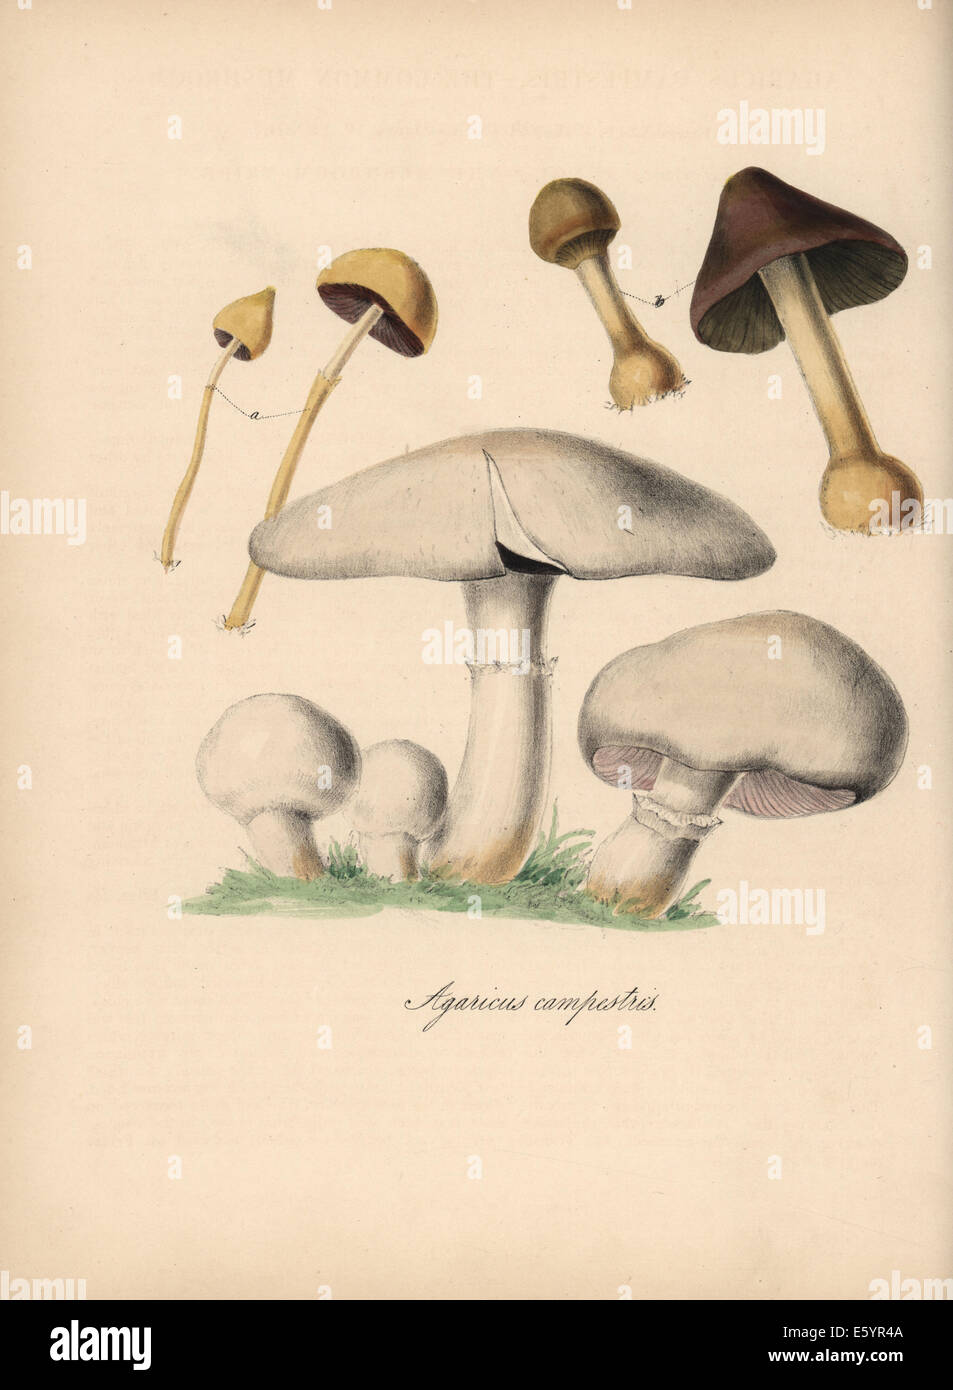 Field mushroom, Agaricus campestris. Stock Photo